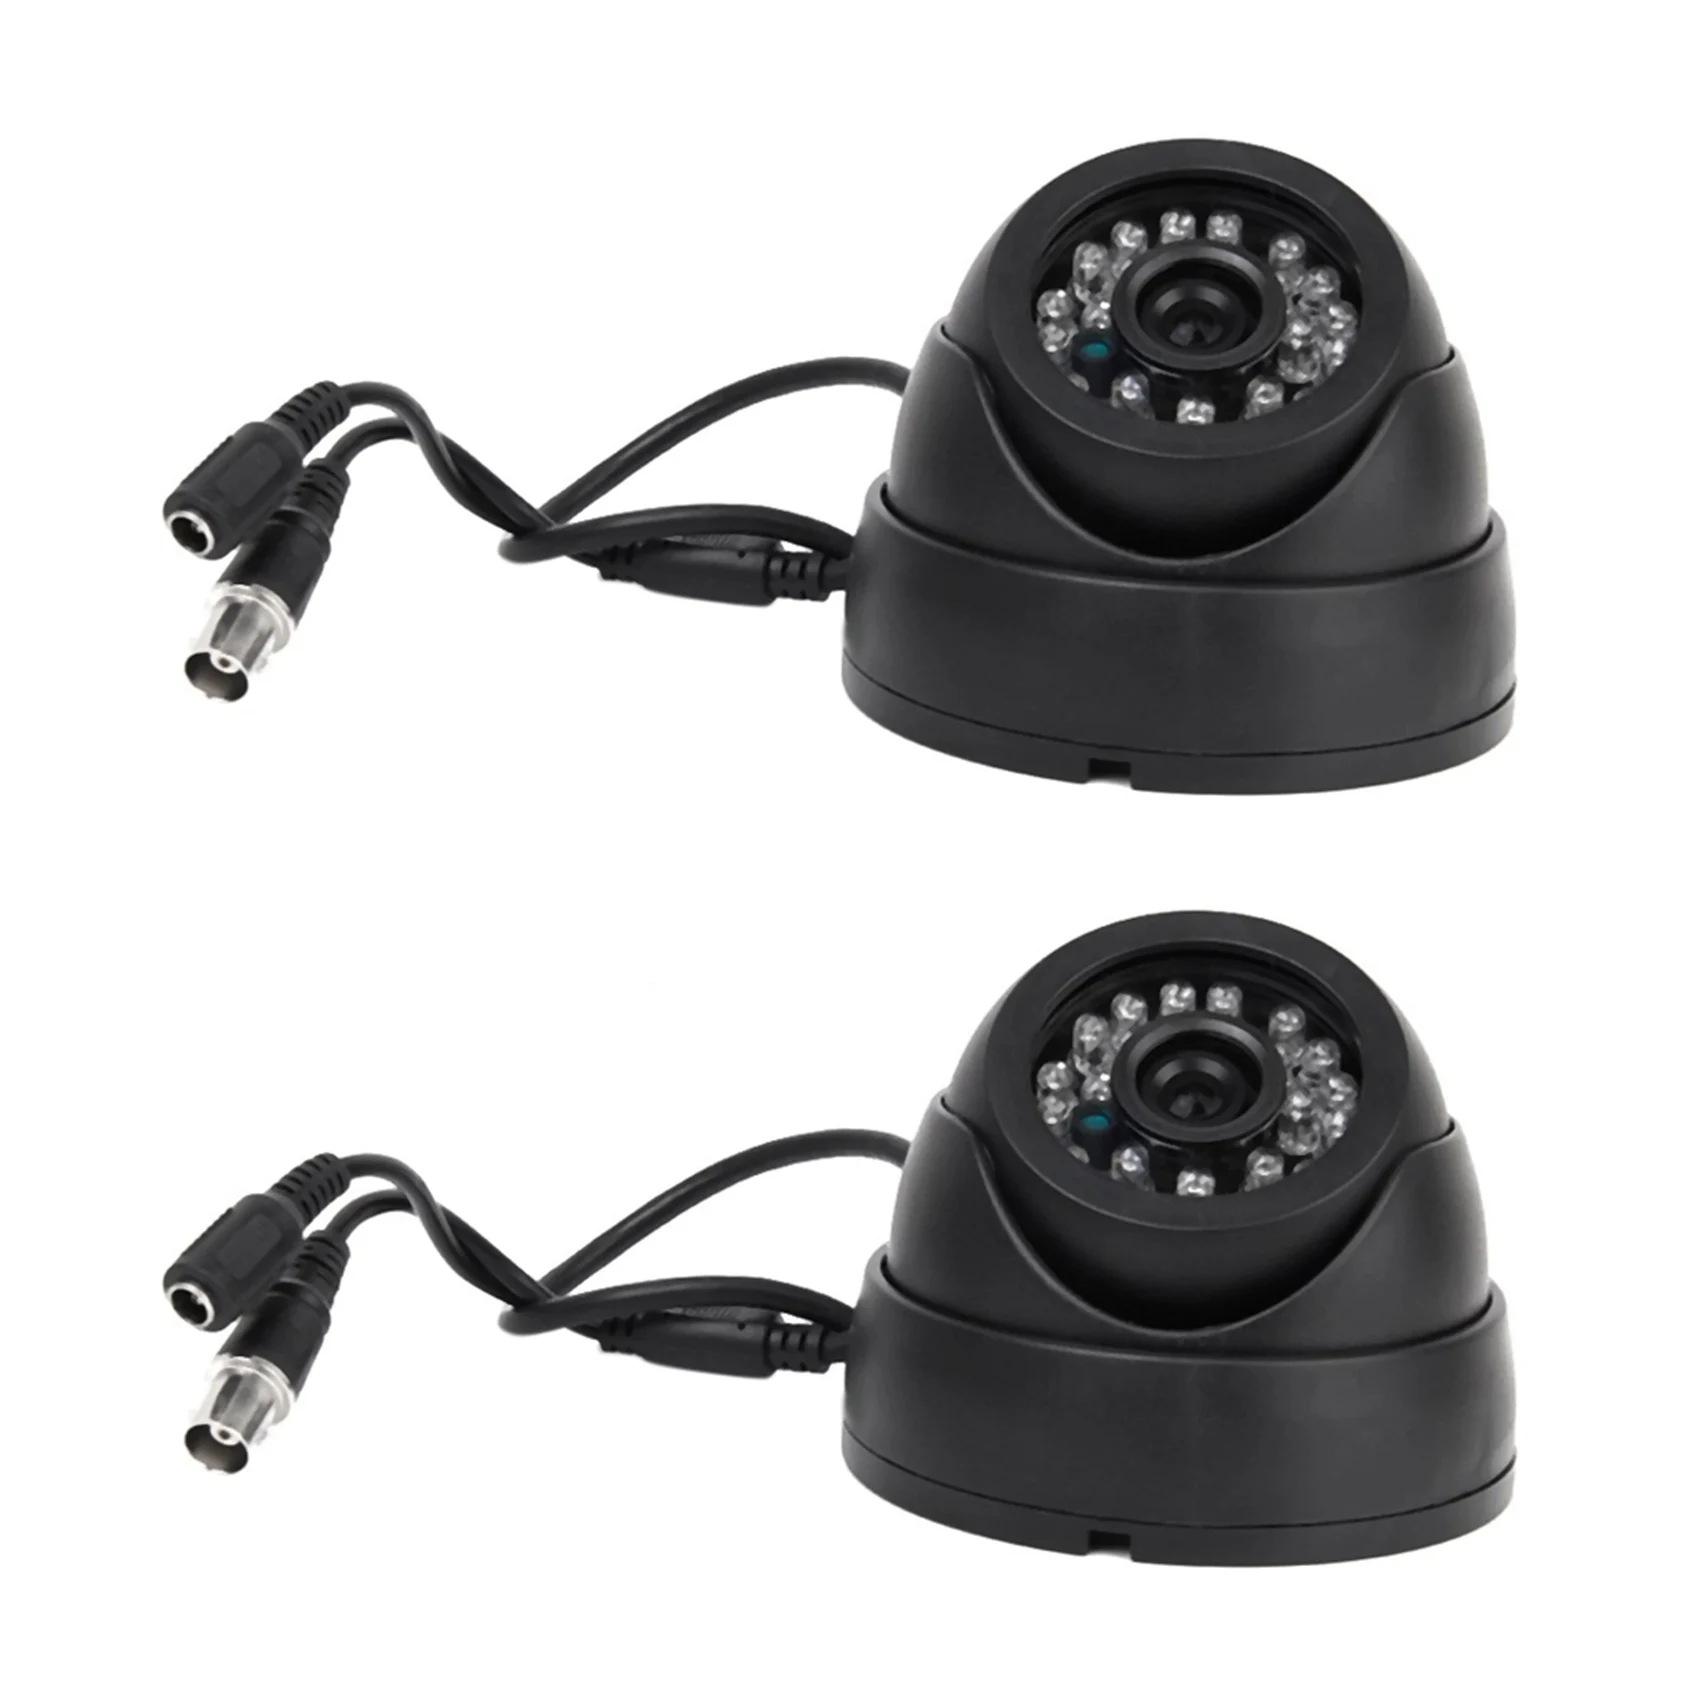 

2X Black Surveillance Camera PAL 1/3 inch CMOS 700TVL 24 LED IR Cut 3.6mm Security Indoor Dome CCTV Camera